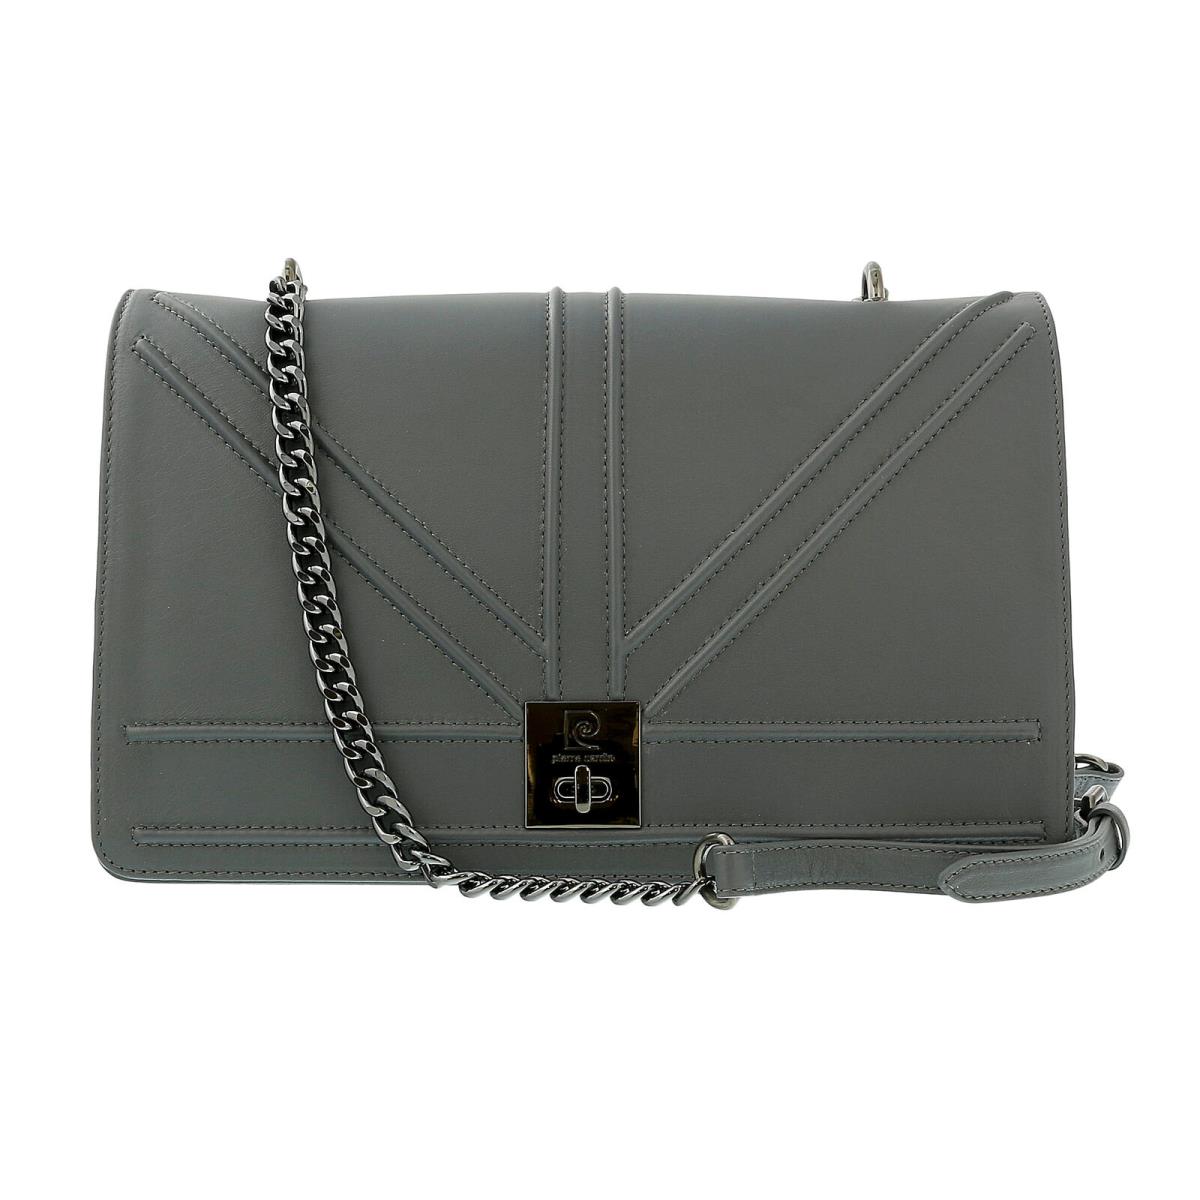 Pierre Cardin Grey Leather Medium Structured Shoulder Bag - Grey